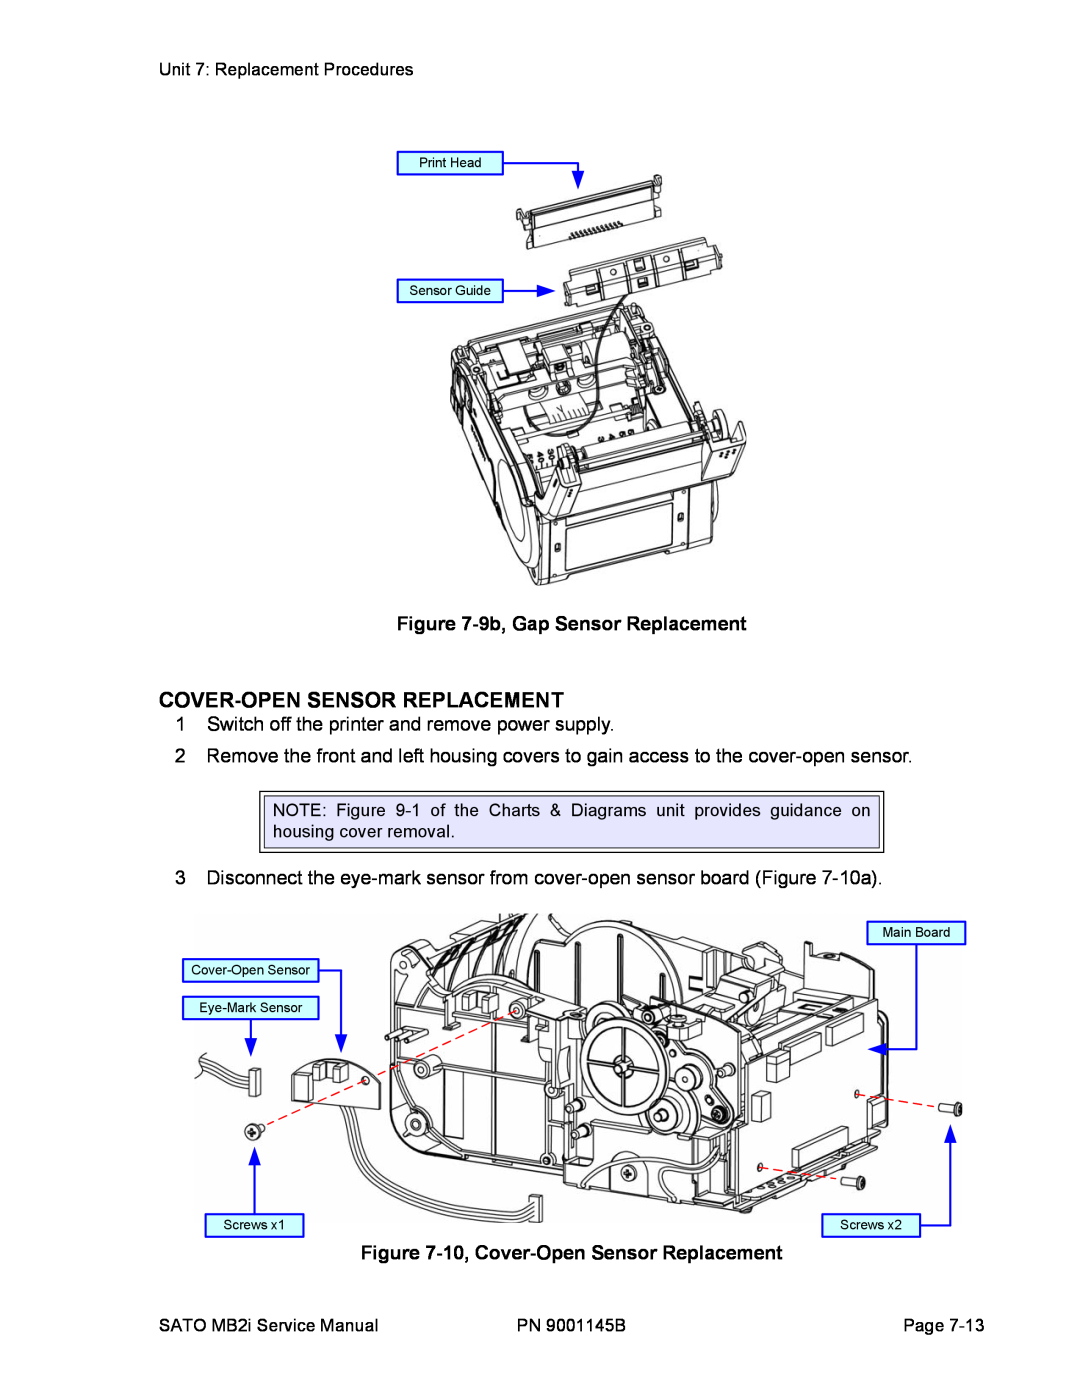 SATO 200i manual 9b, Gap Sensor Replacement, 10, Cover-Open Sensor Replacement 